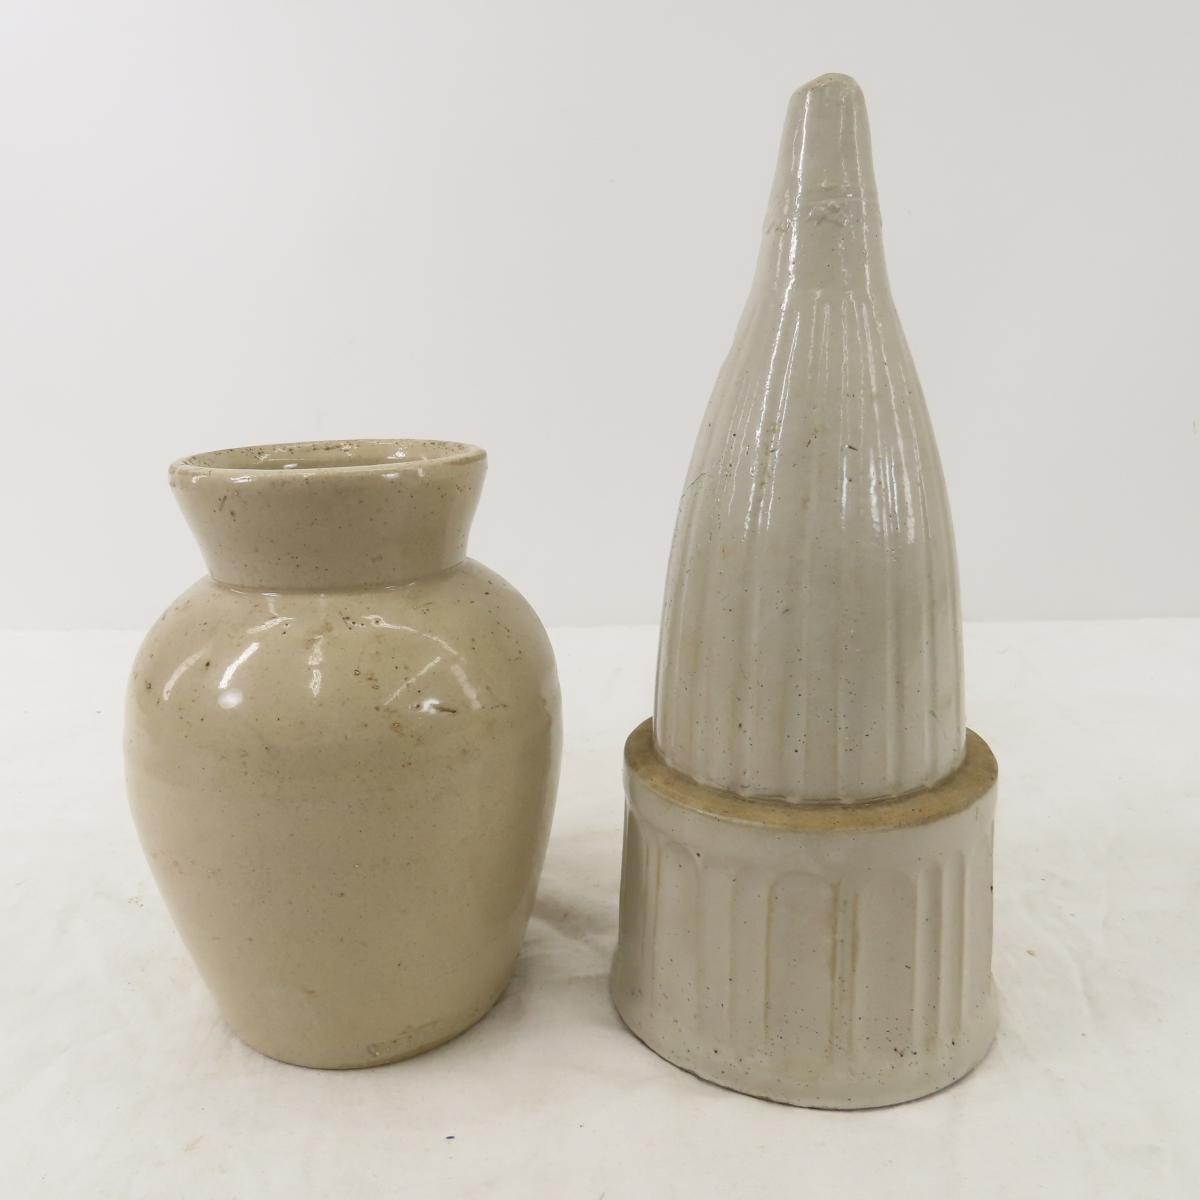 Stoneware Cemetery Vase, crocks and more